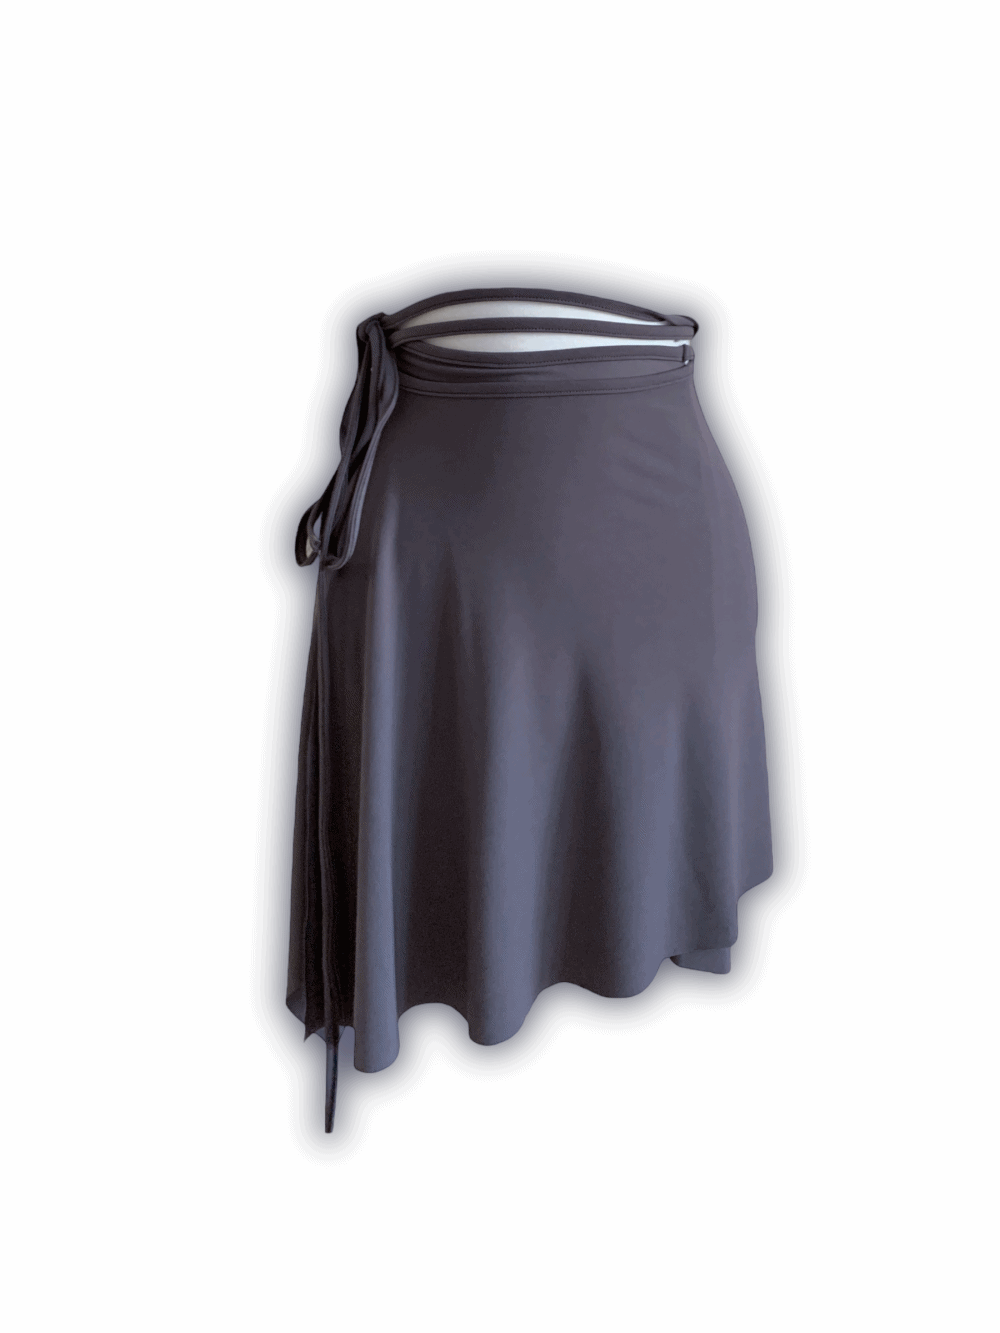 [Skirt] Kira Cut-off Layered Mini Skirt / 2 colors